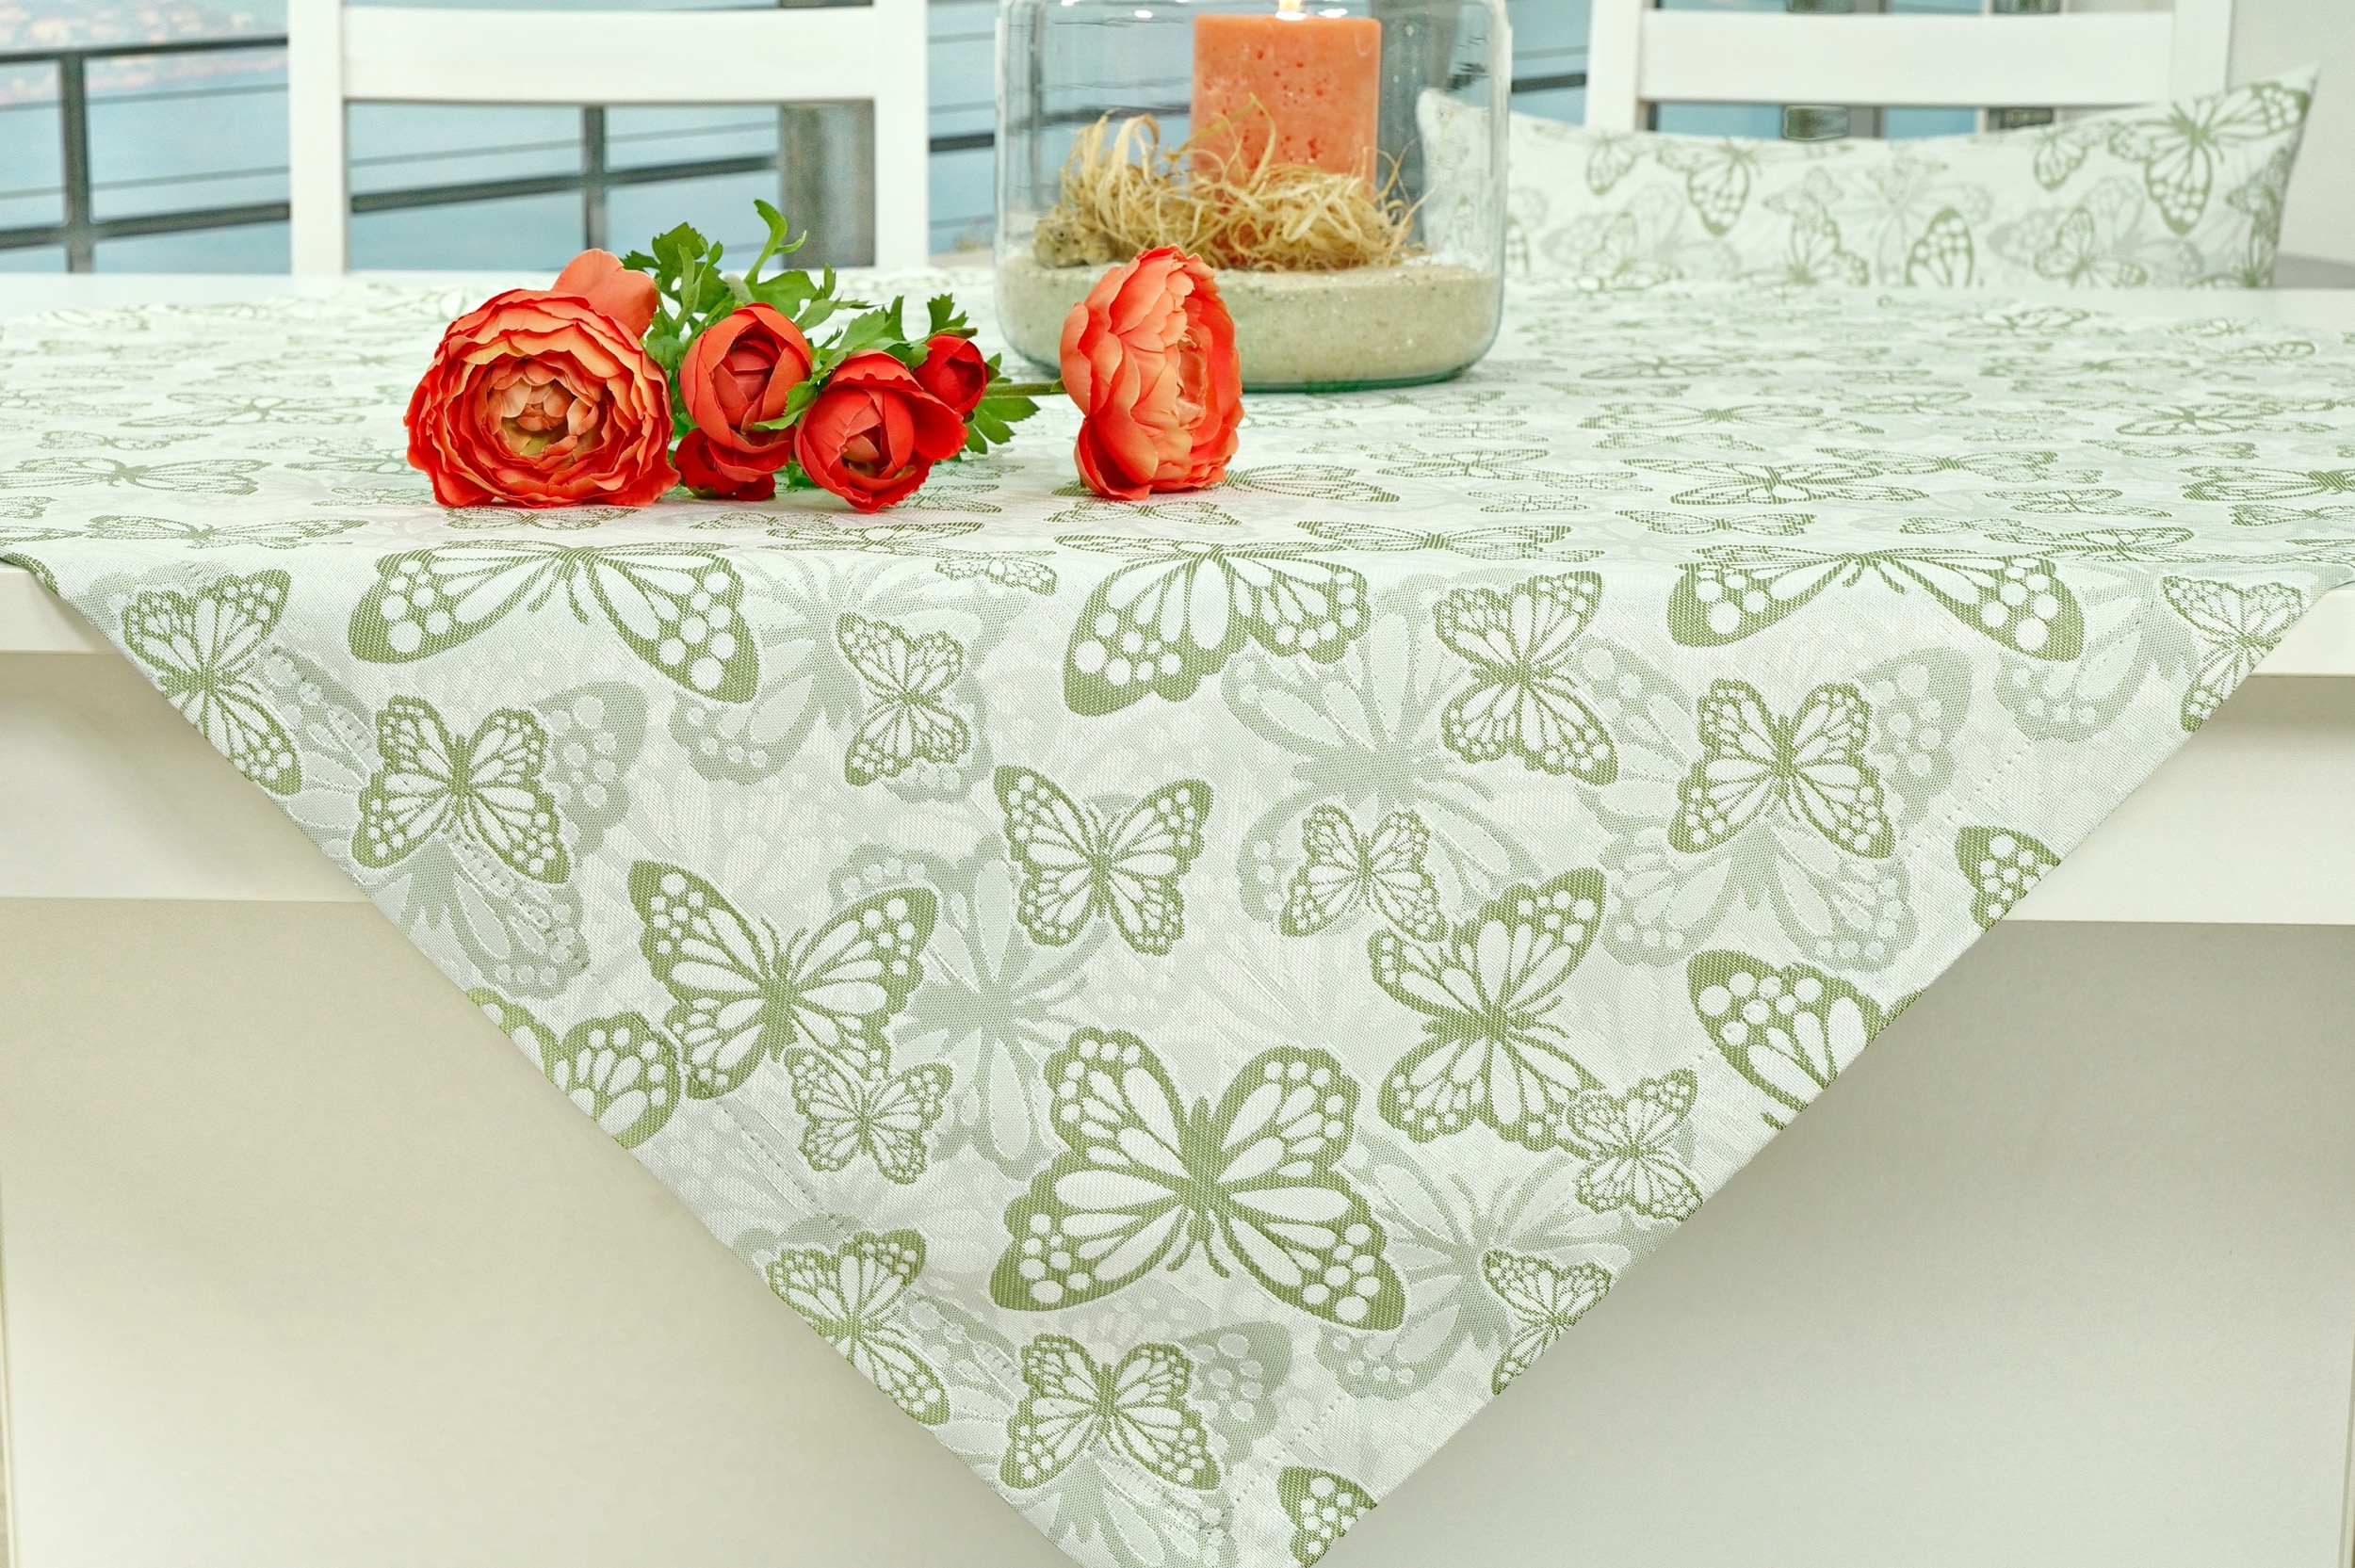 Fleckgeschützte Tischdecke Weiß Grün Muster Springtime ab 80x80 cm - 160x160 cm QUADRATISCH